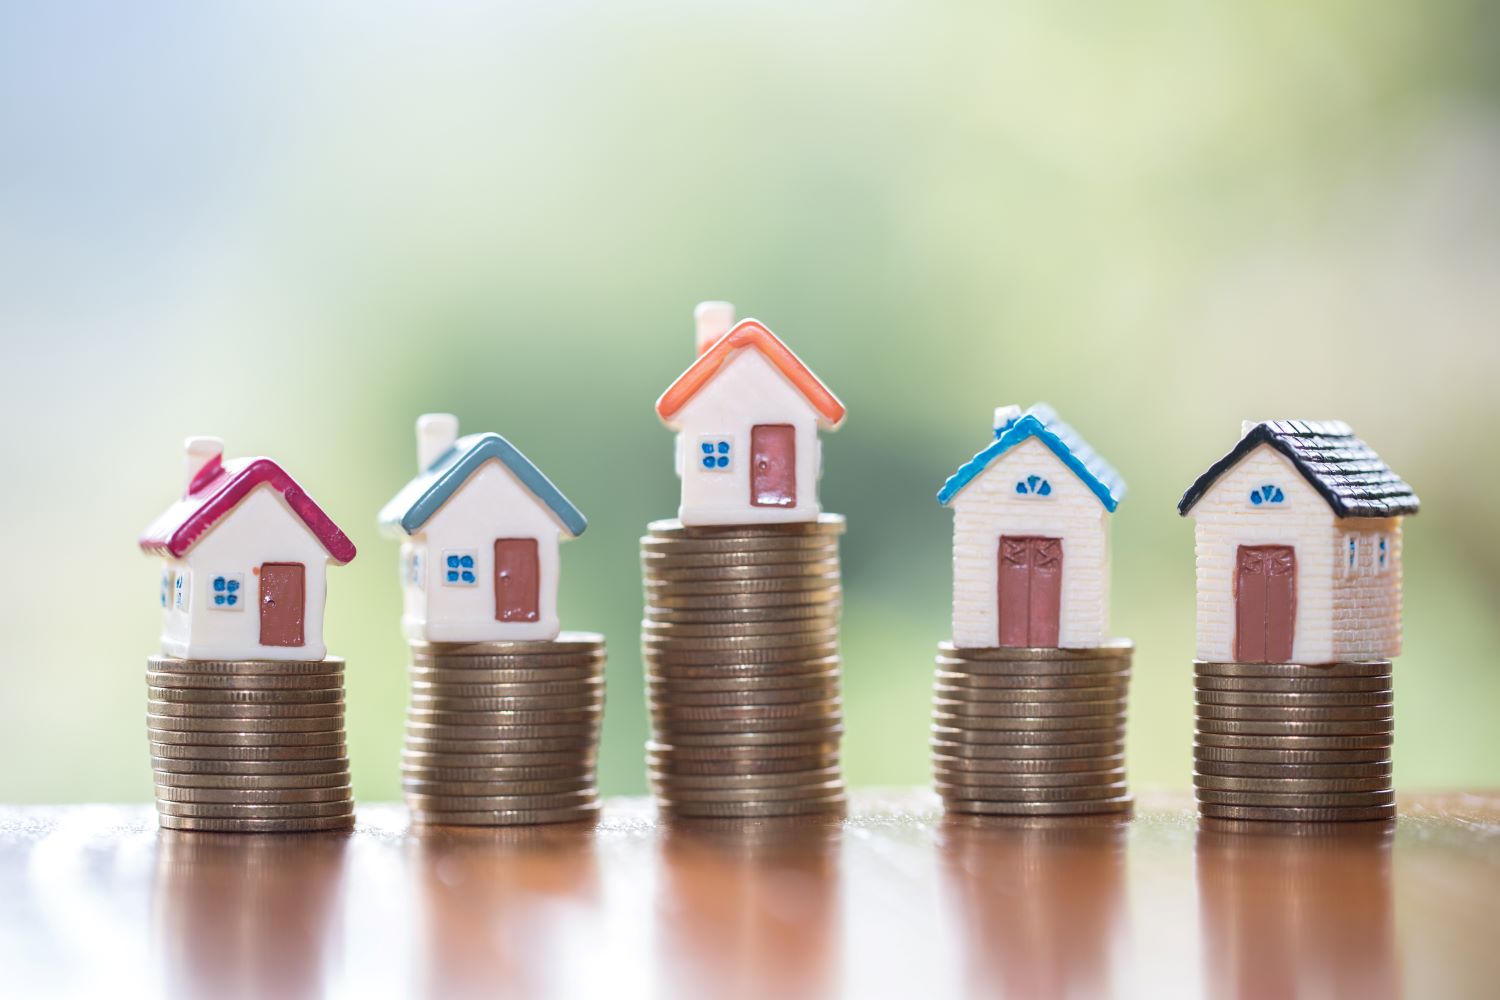 Can You Trust Online Home Value Estimates?